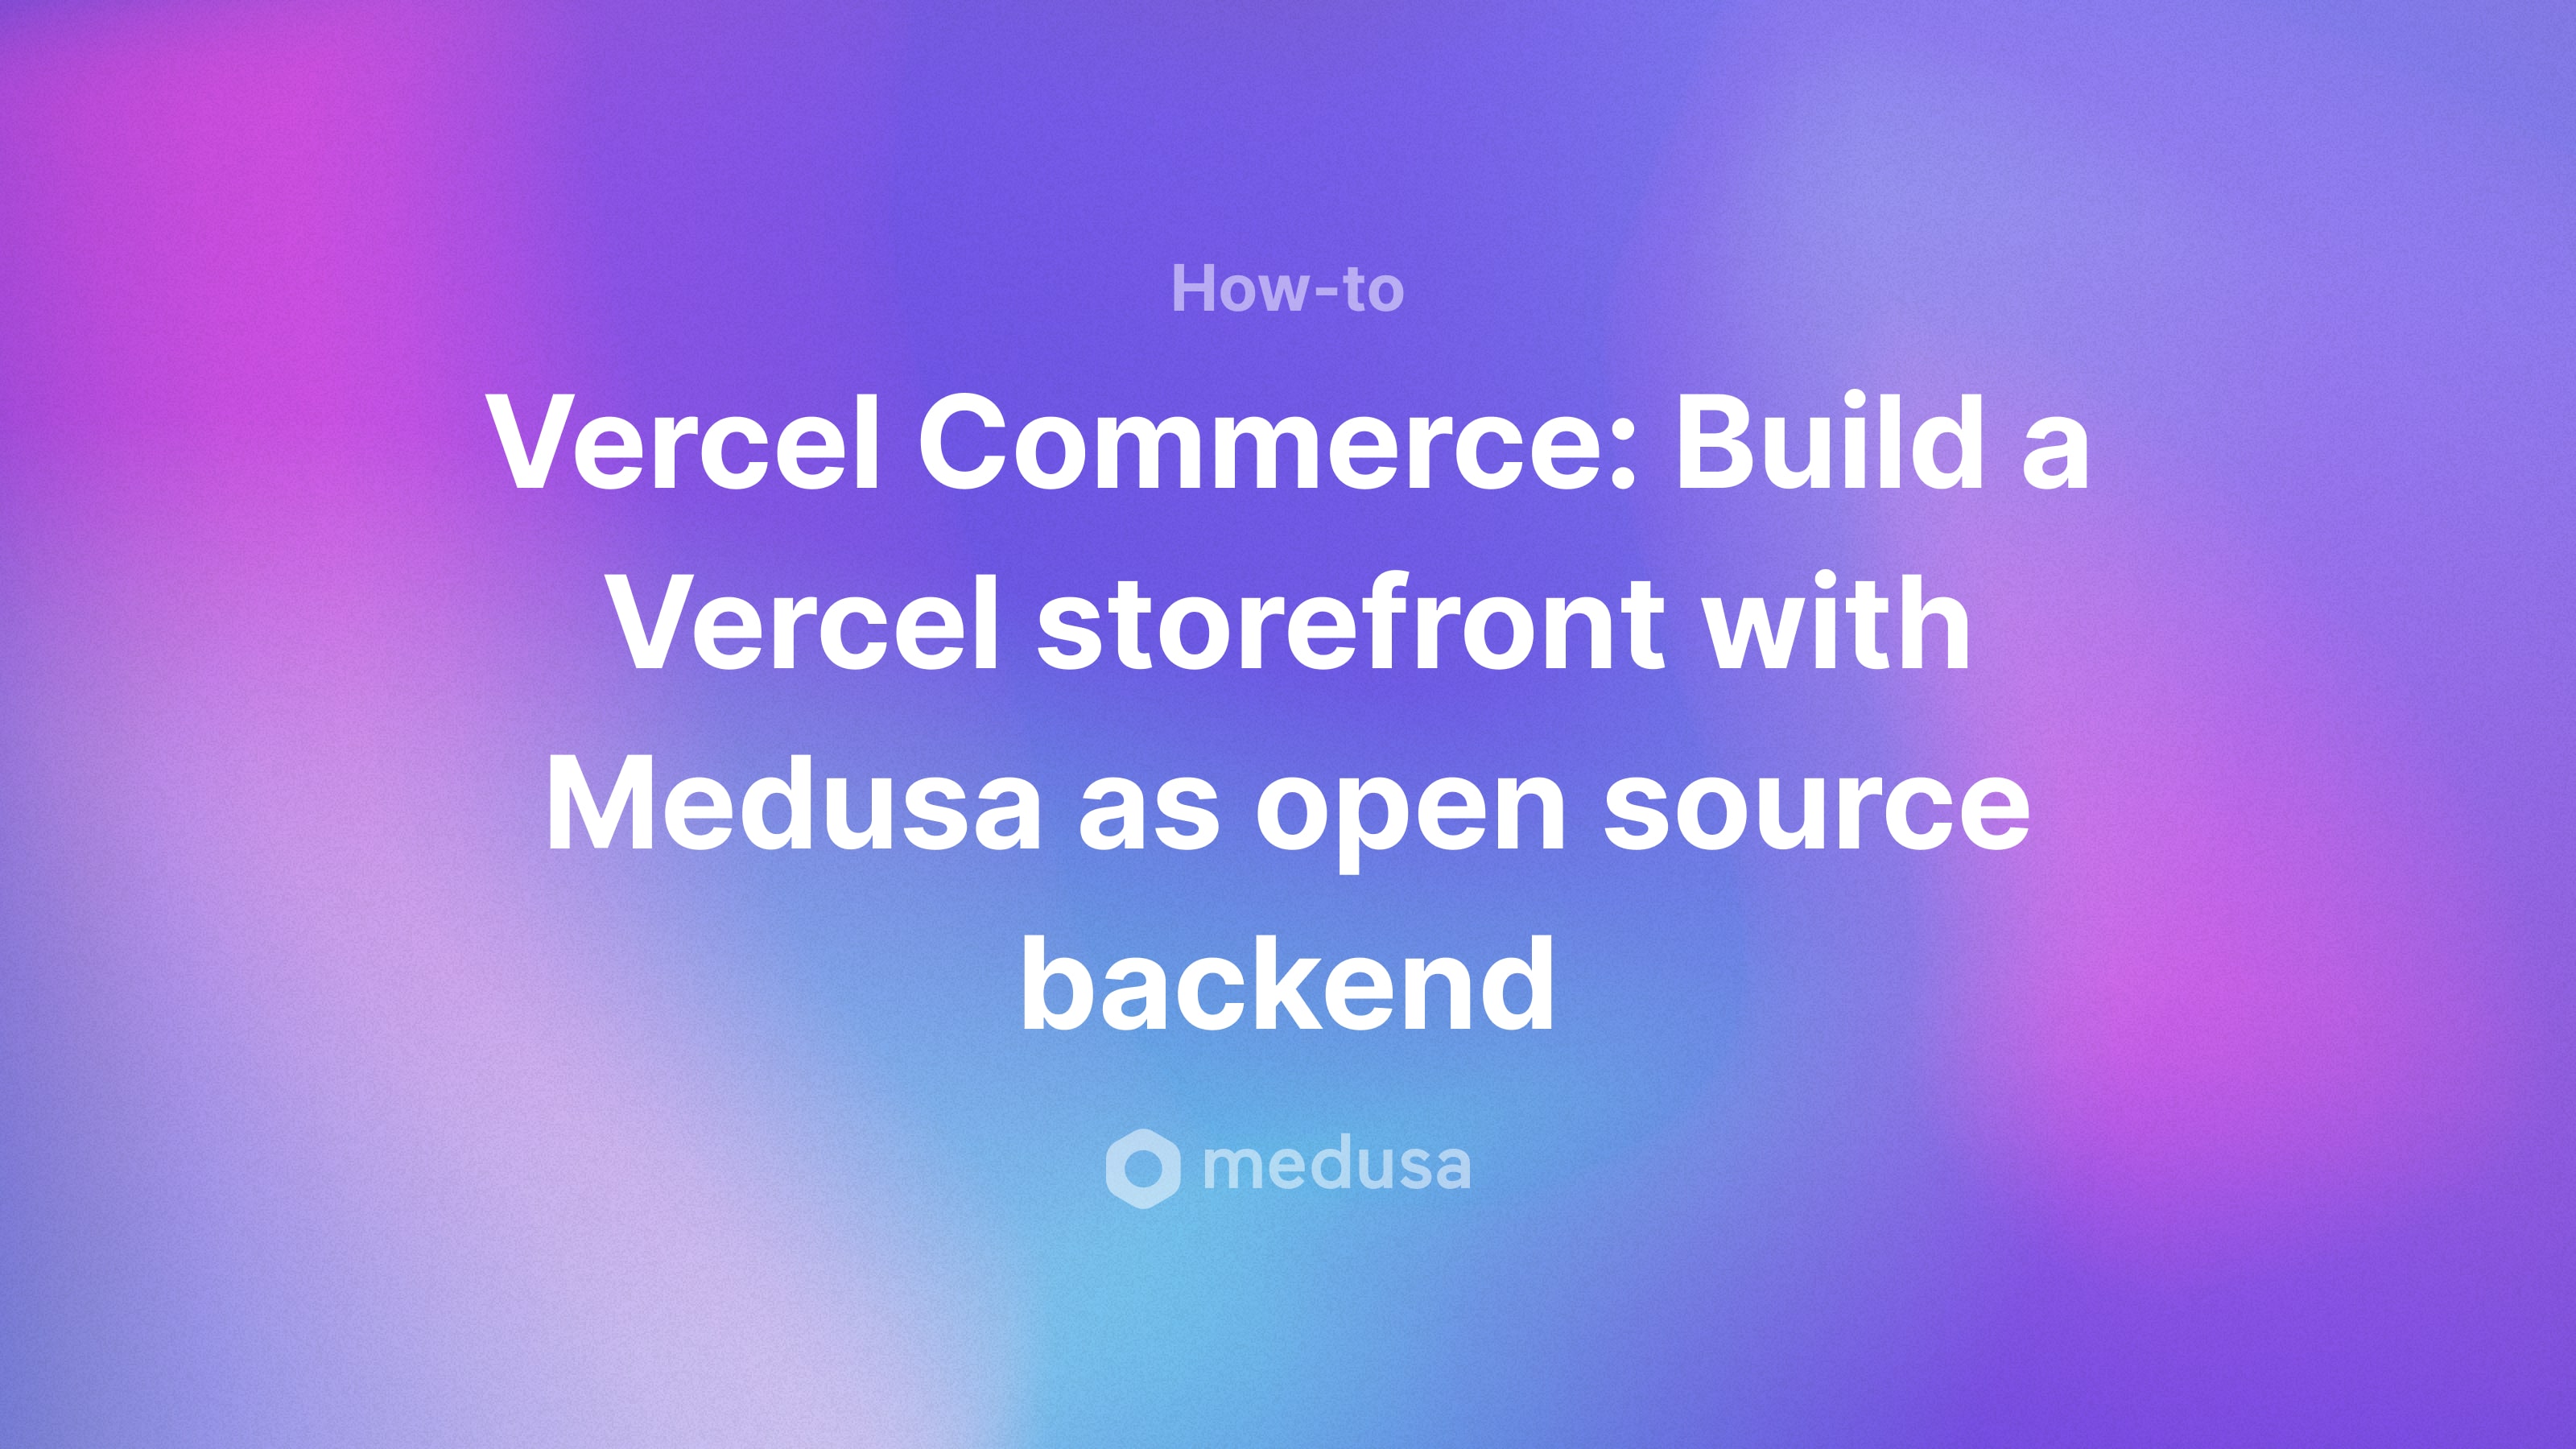 Vercel Commerce: Build a Vercel storefront with Medusa as open source backend